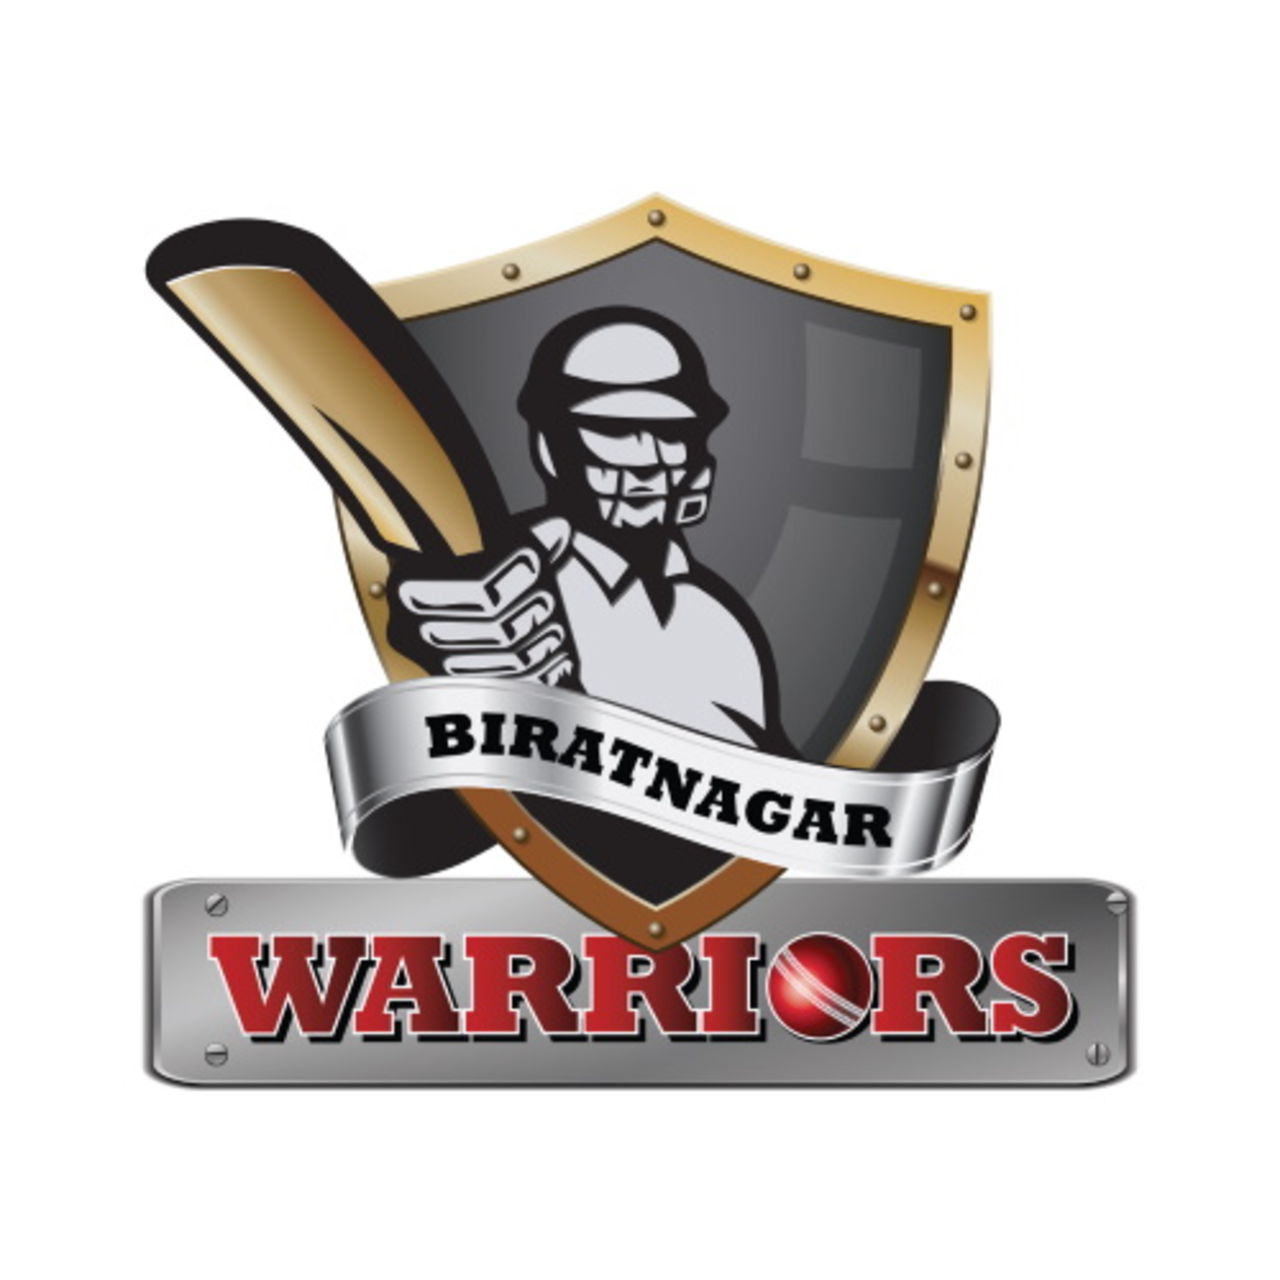 Biratnagar Warriors team logo